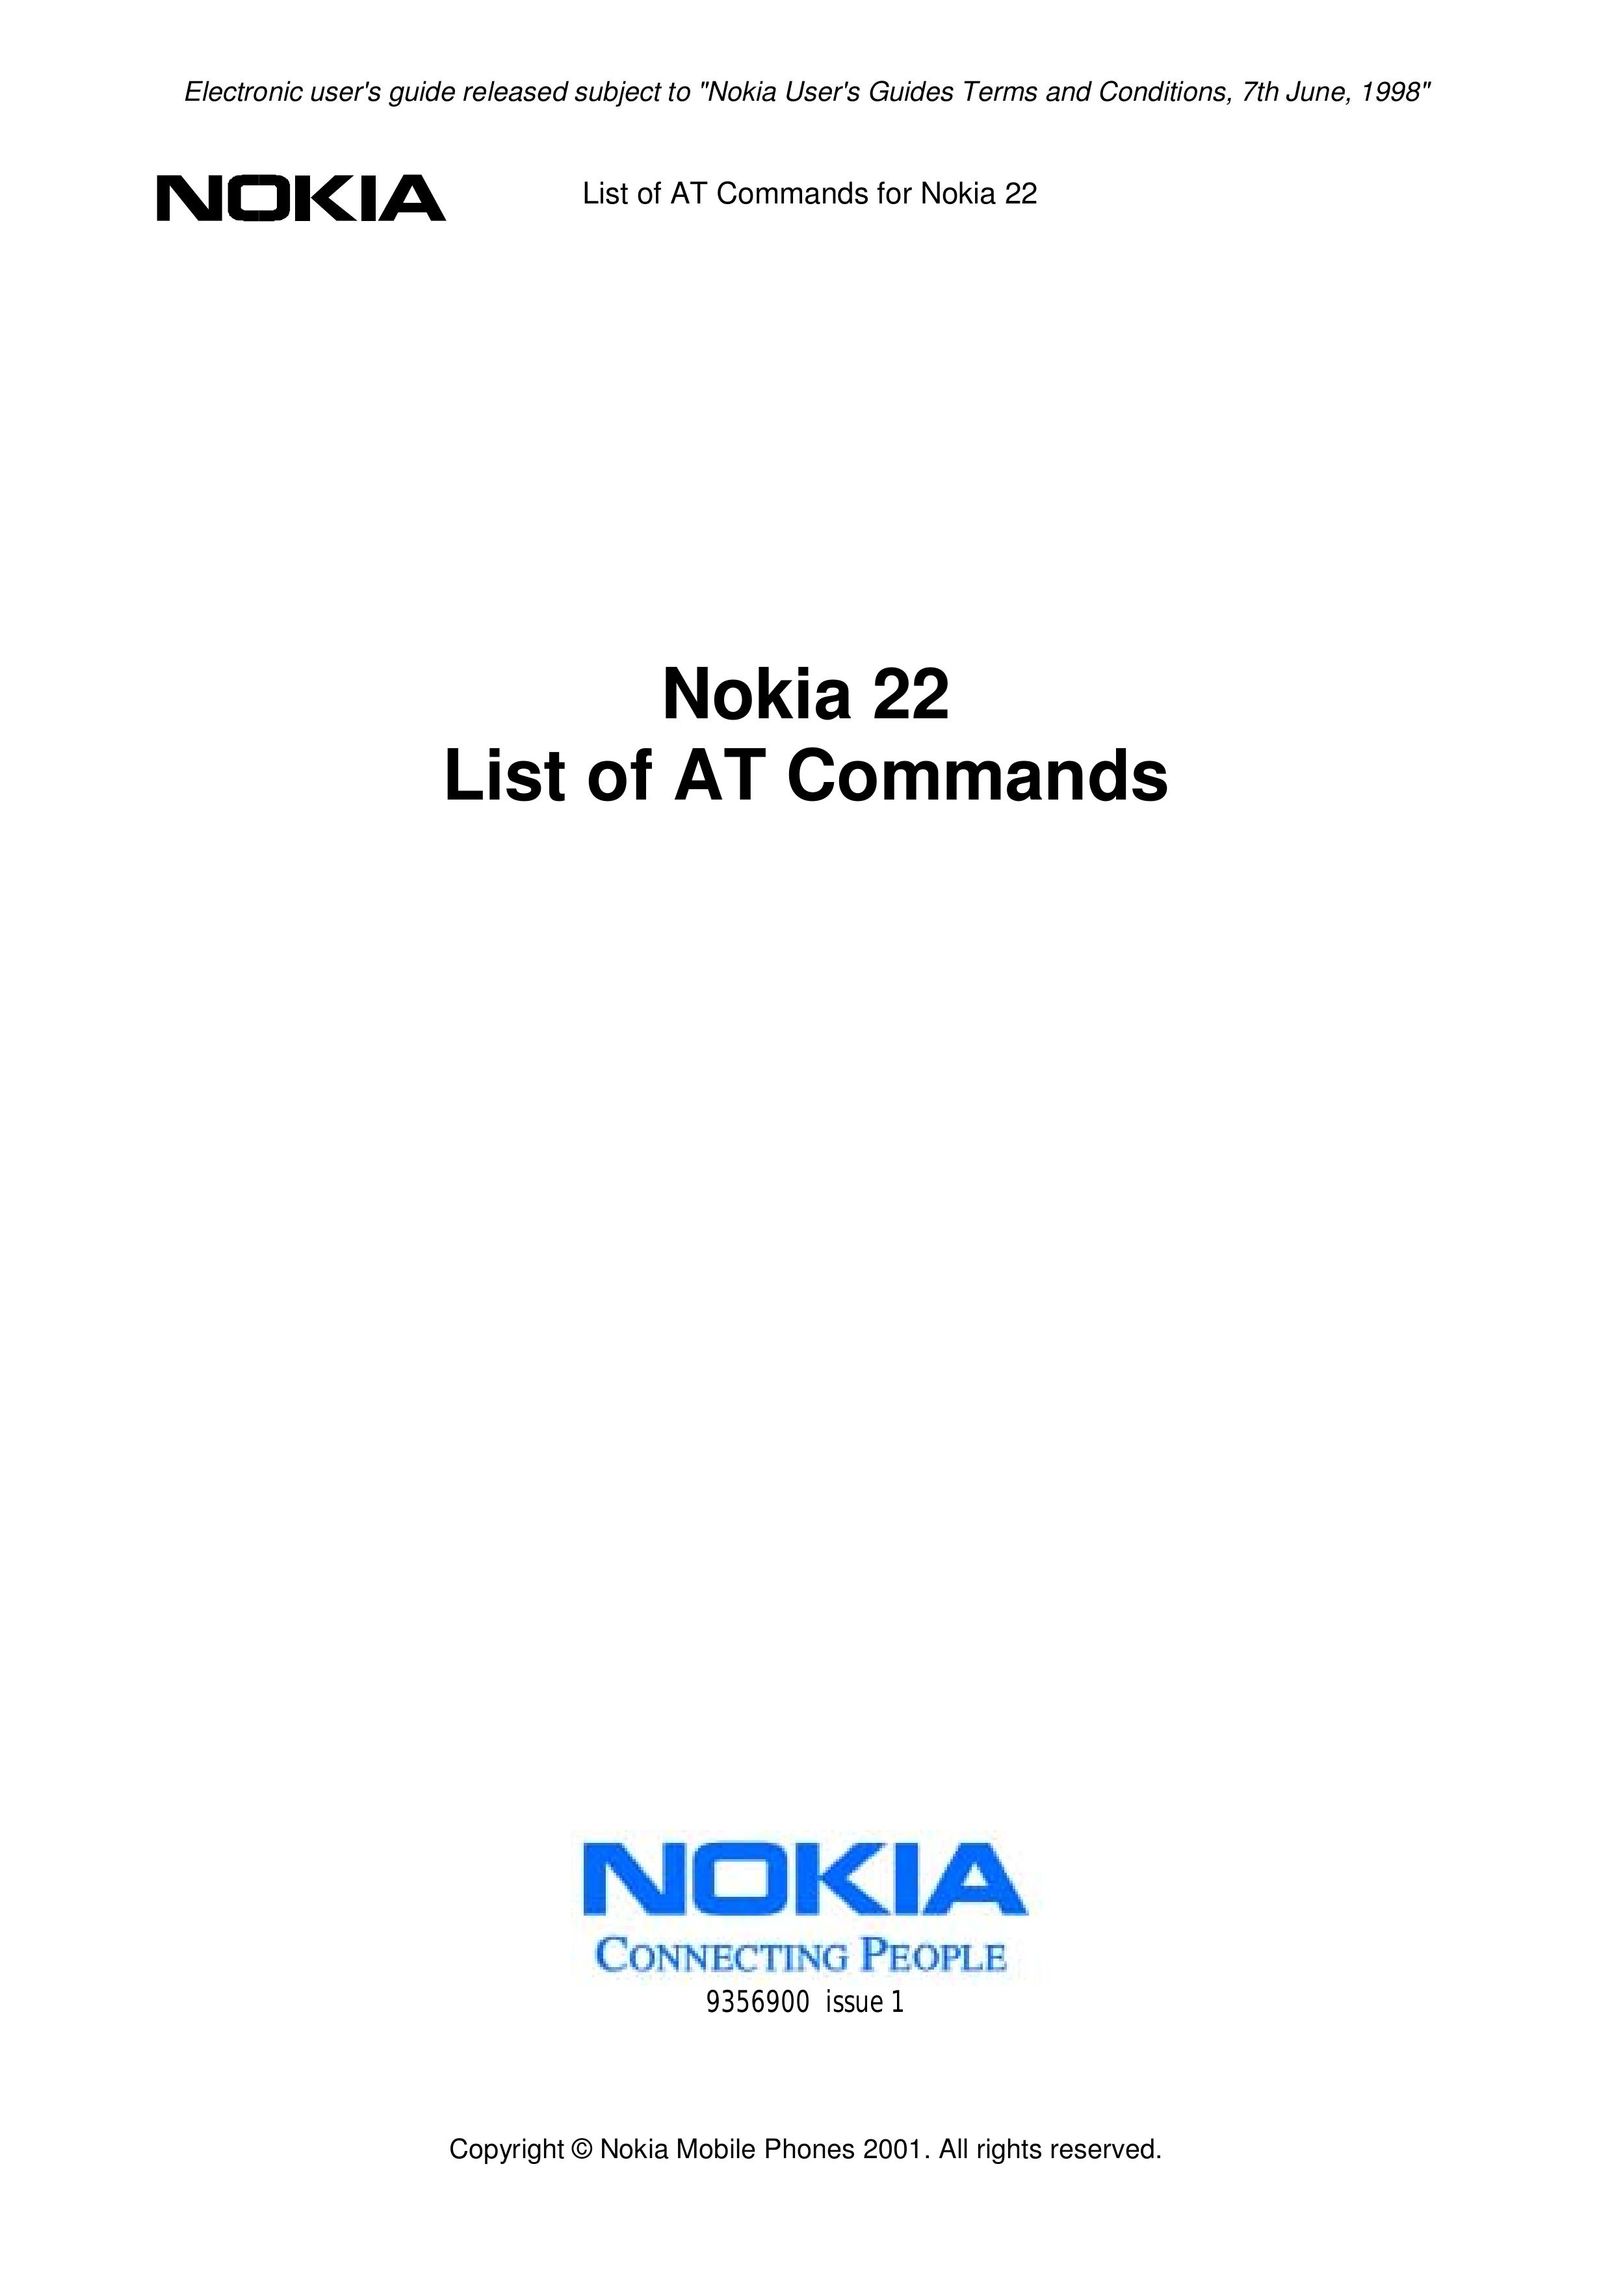 Nokia 9356900 issue 1 Telephone User Manual